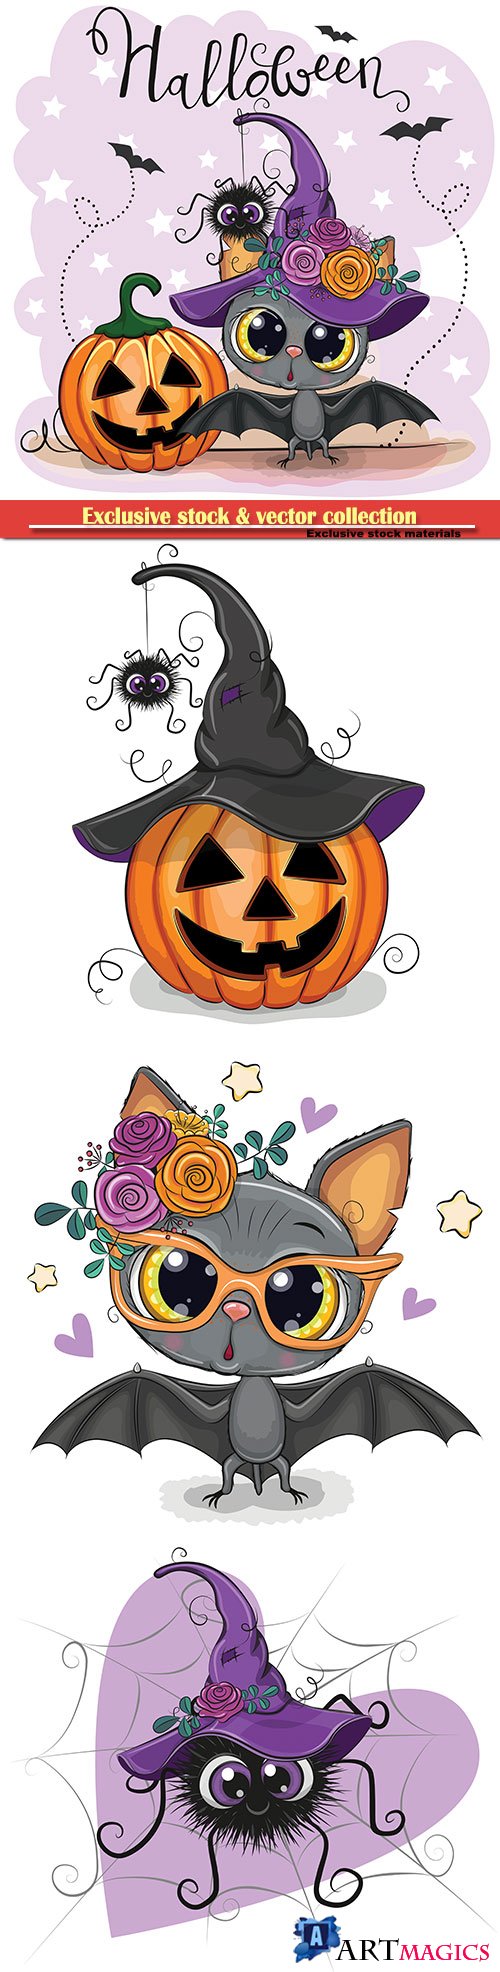 Halloween illustrations and design vector elements